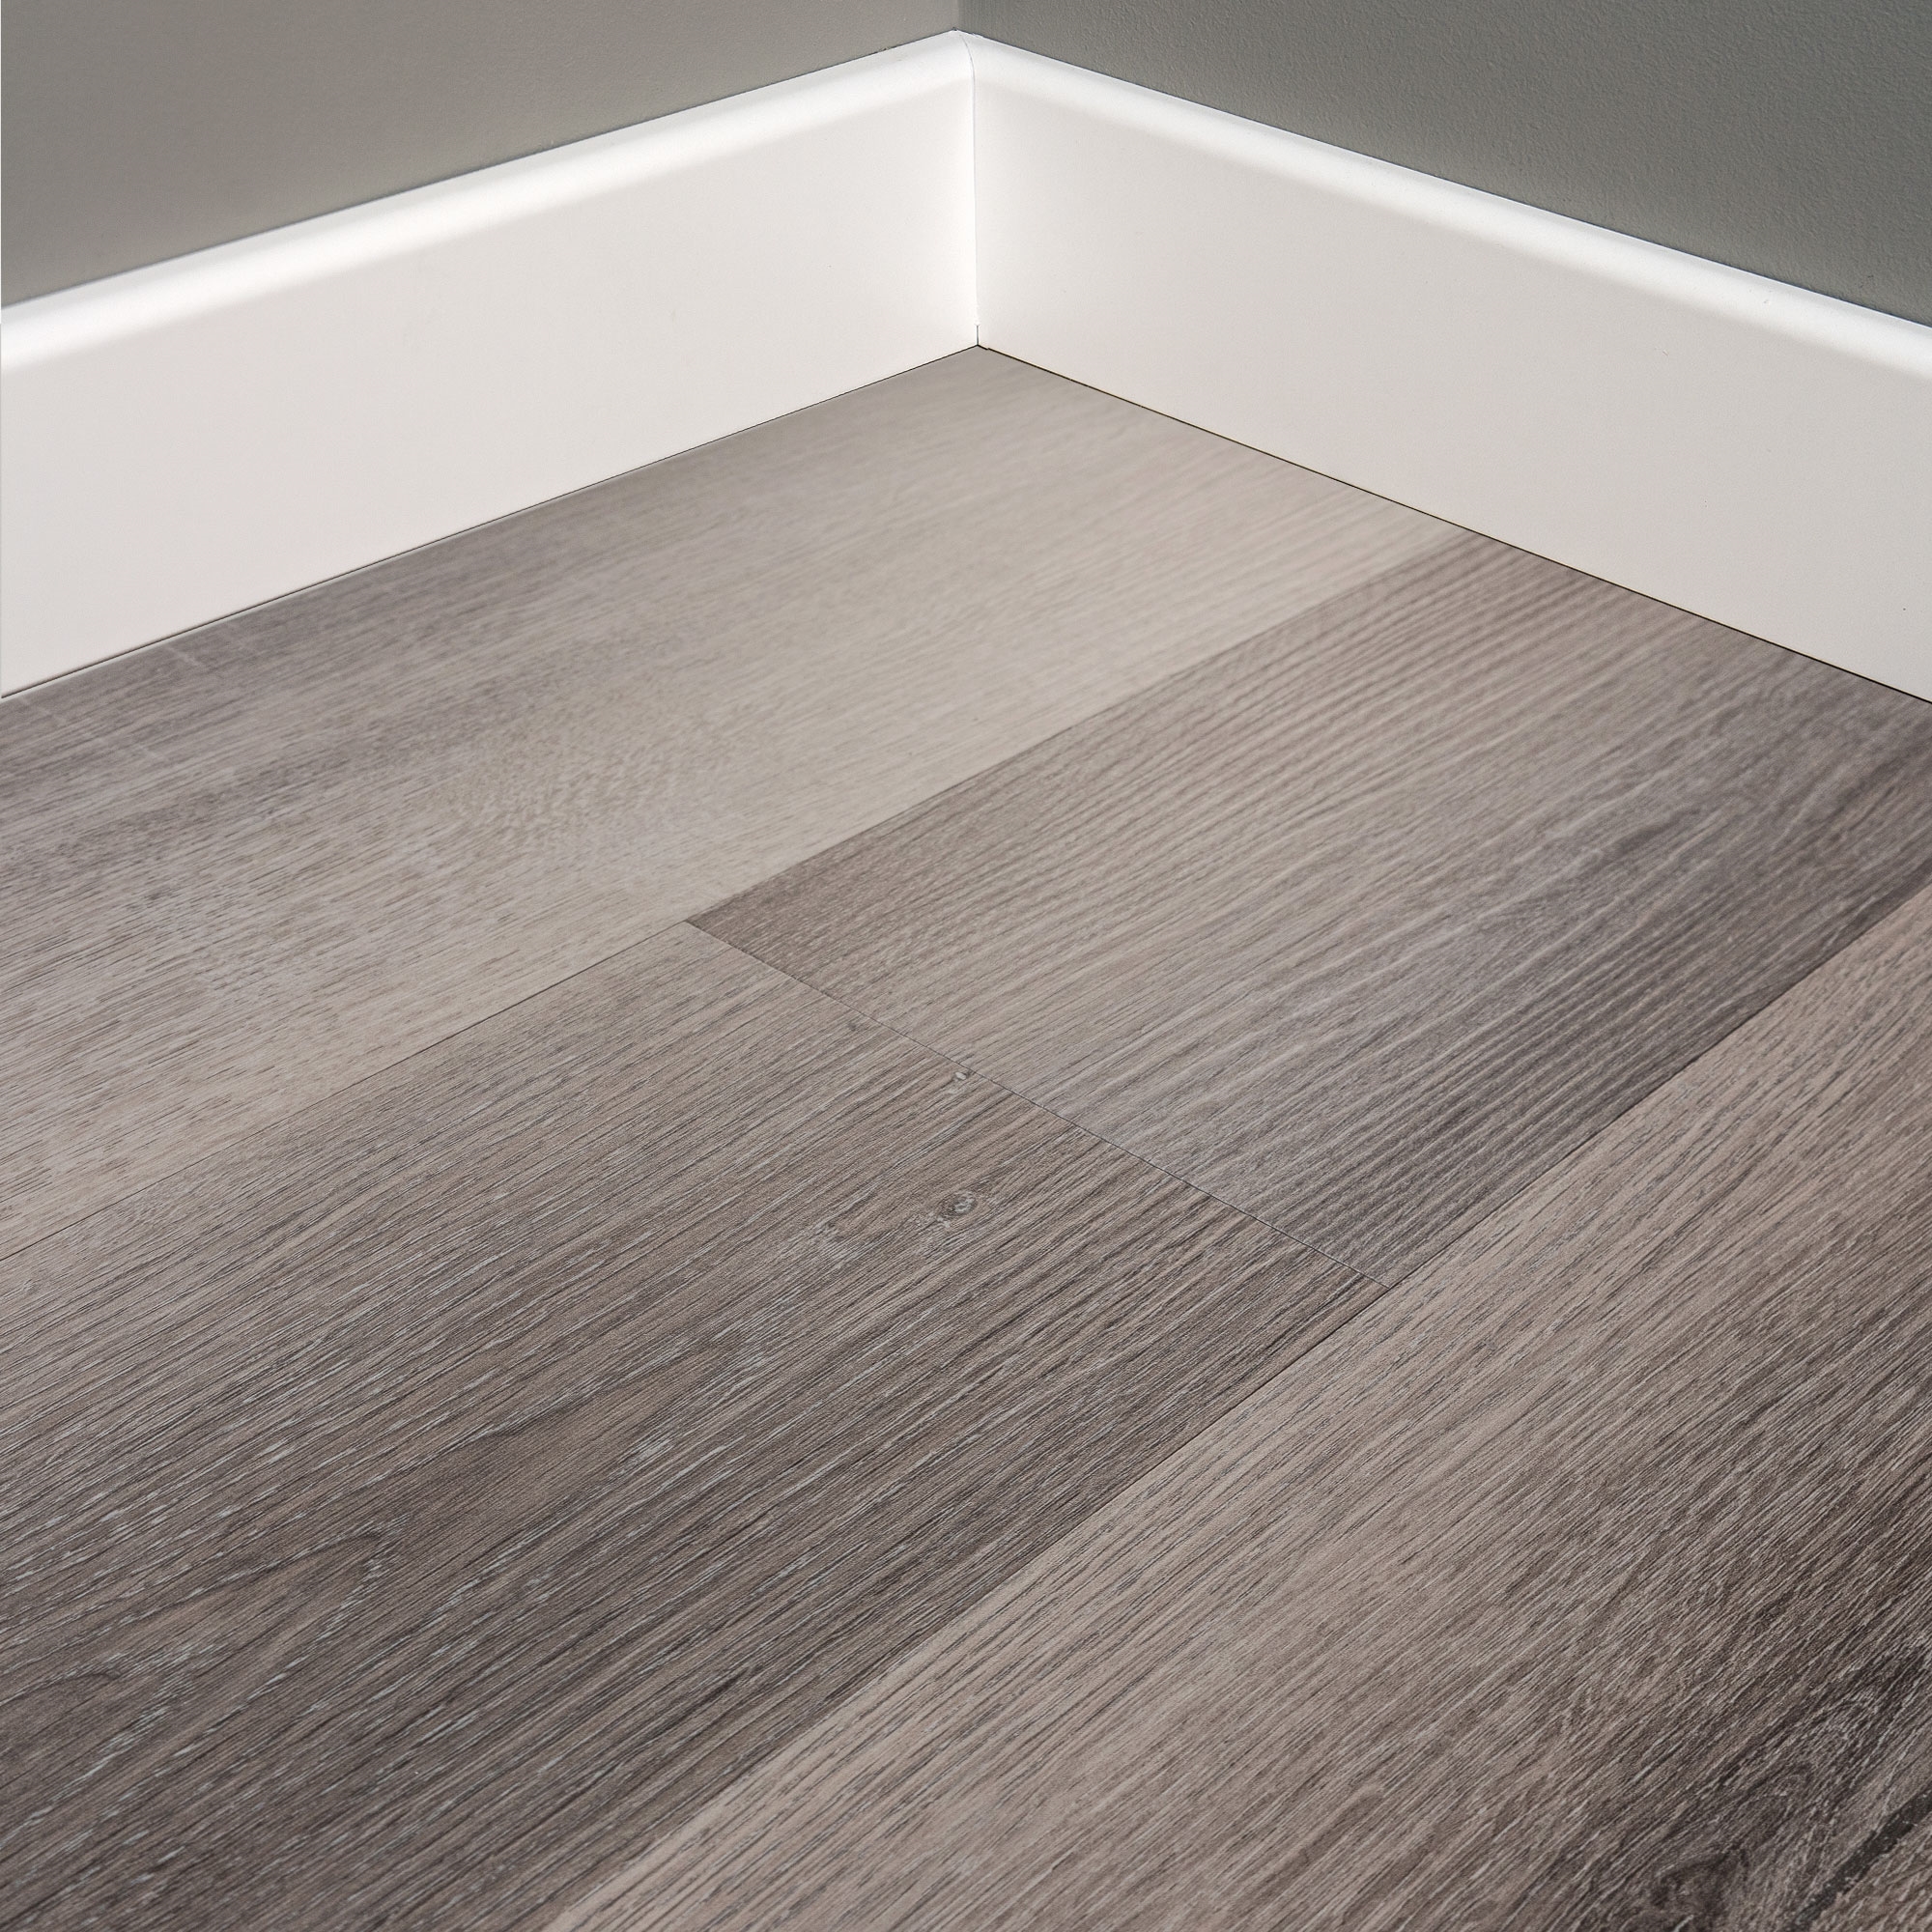 2,23 - 11,15 m² PVC Klebevinylboden Vinylboden Bodenbelag Laminat Fußboden Boden